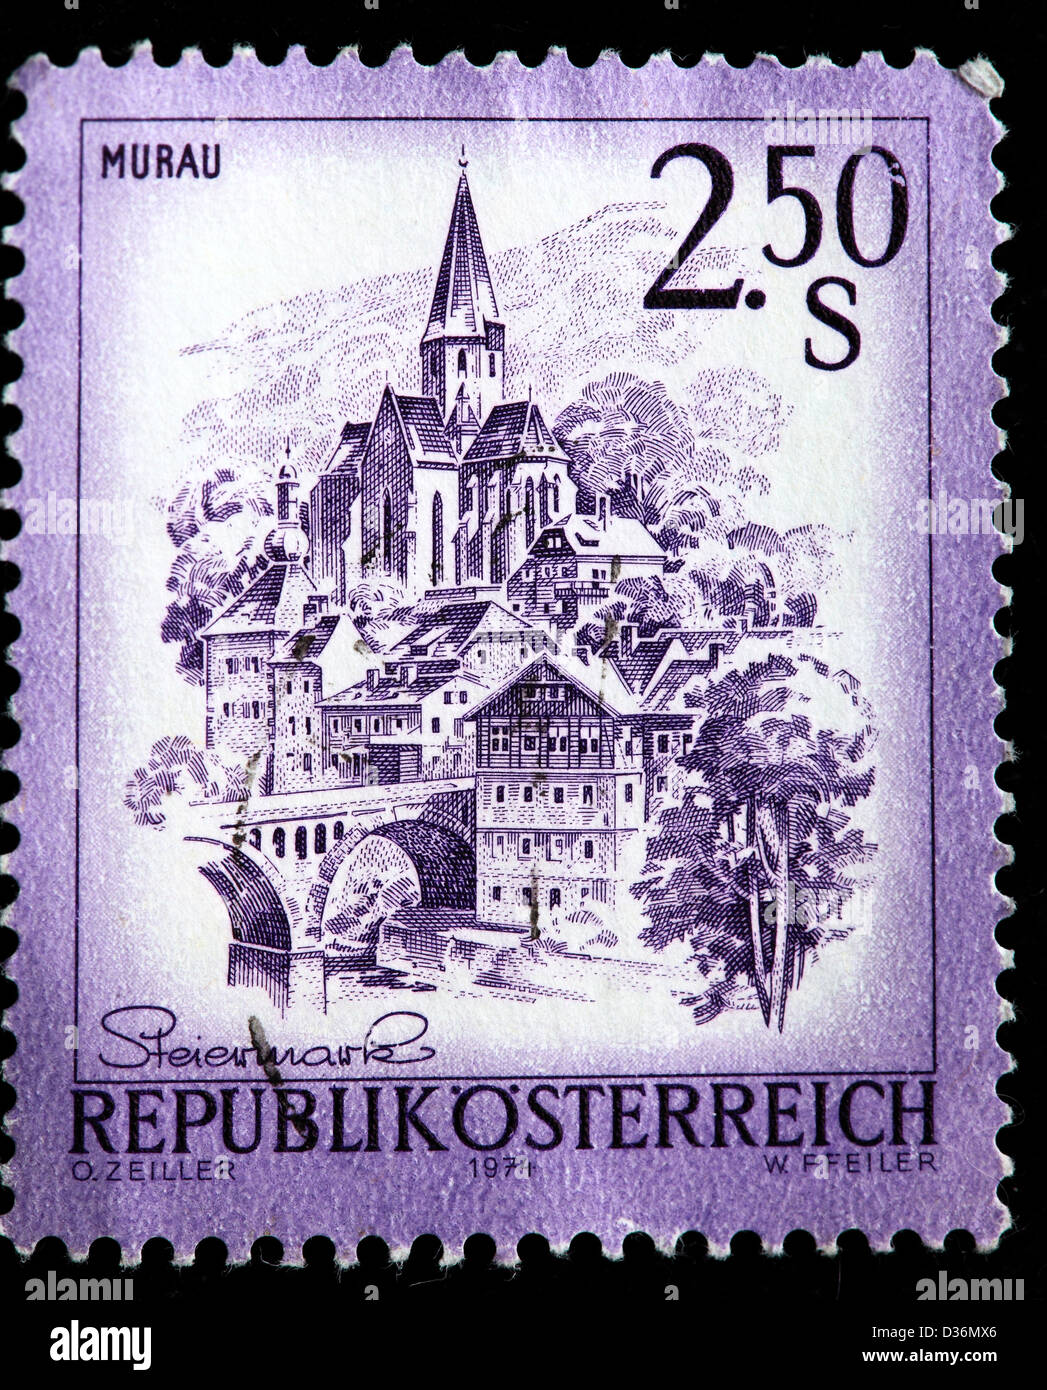 Murau, Styria, postage stamp, Austria, 1974 Stock Photo